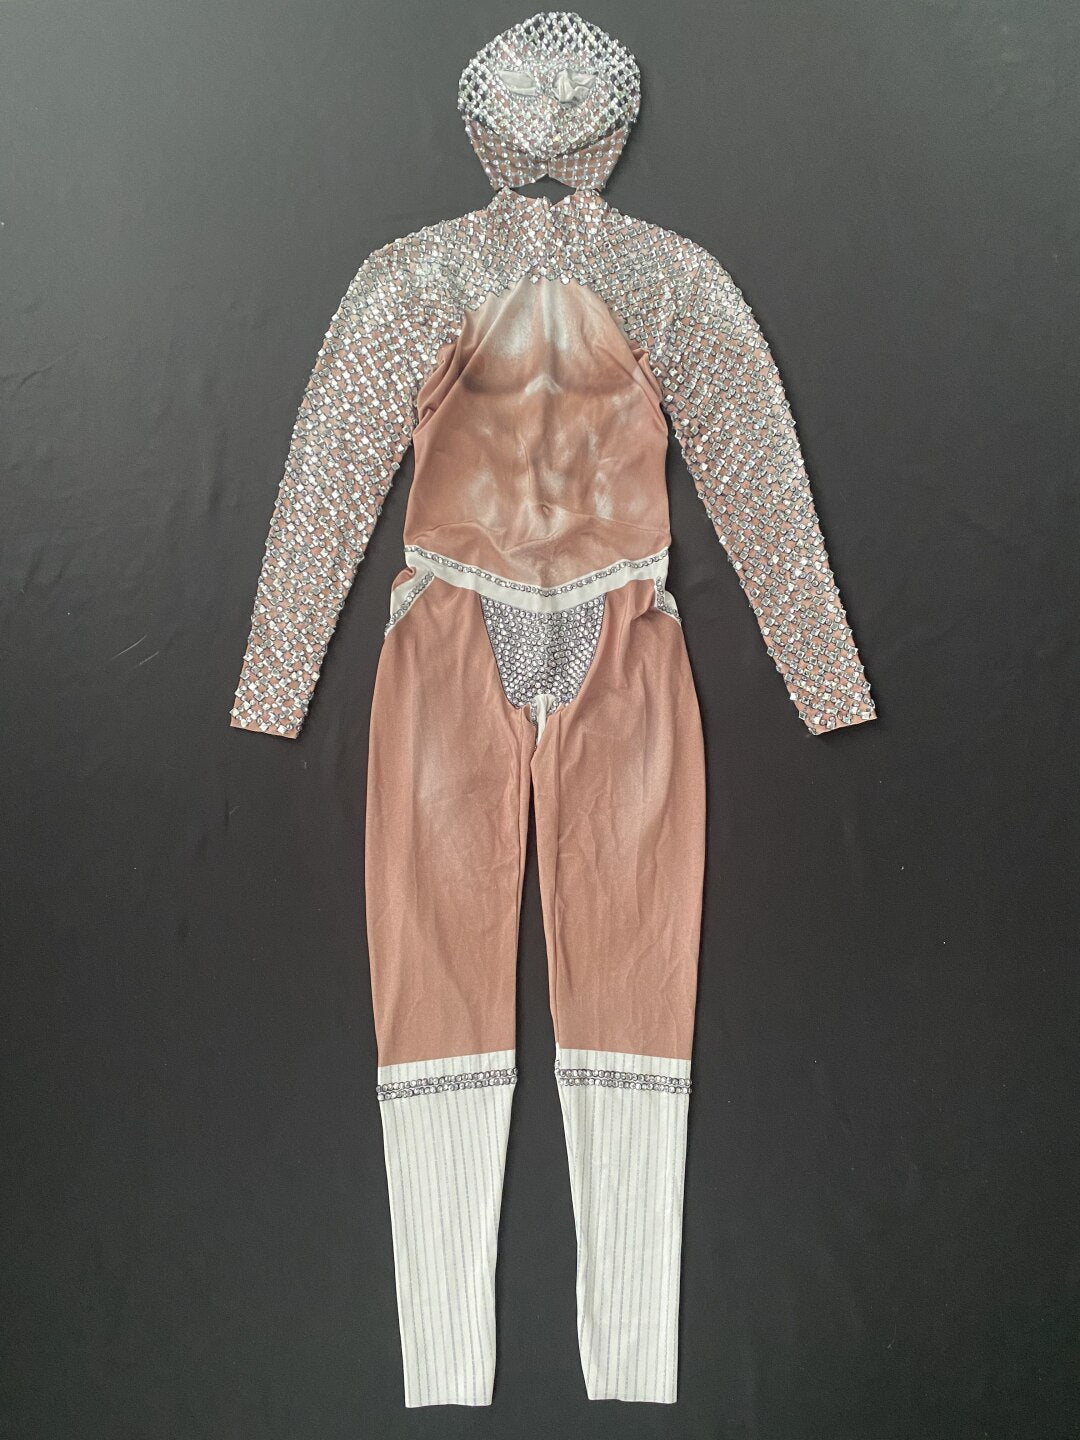 Shining Stone Nude Muscle Men Jumpsuit Long Sleeves Rhinestones Outfit Evening Celebrate clothing Birthday Dance Costume Neiyi